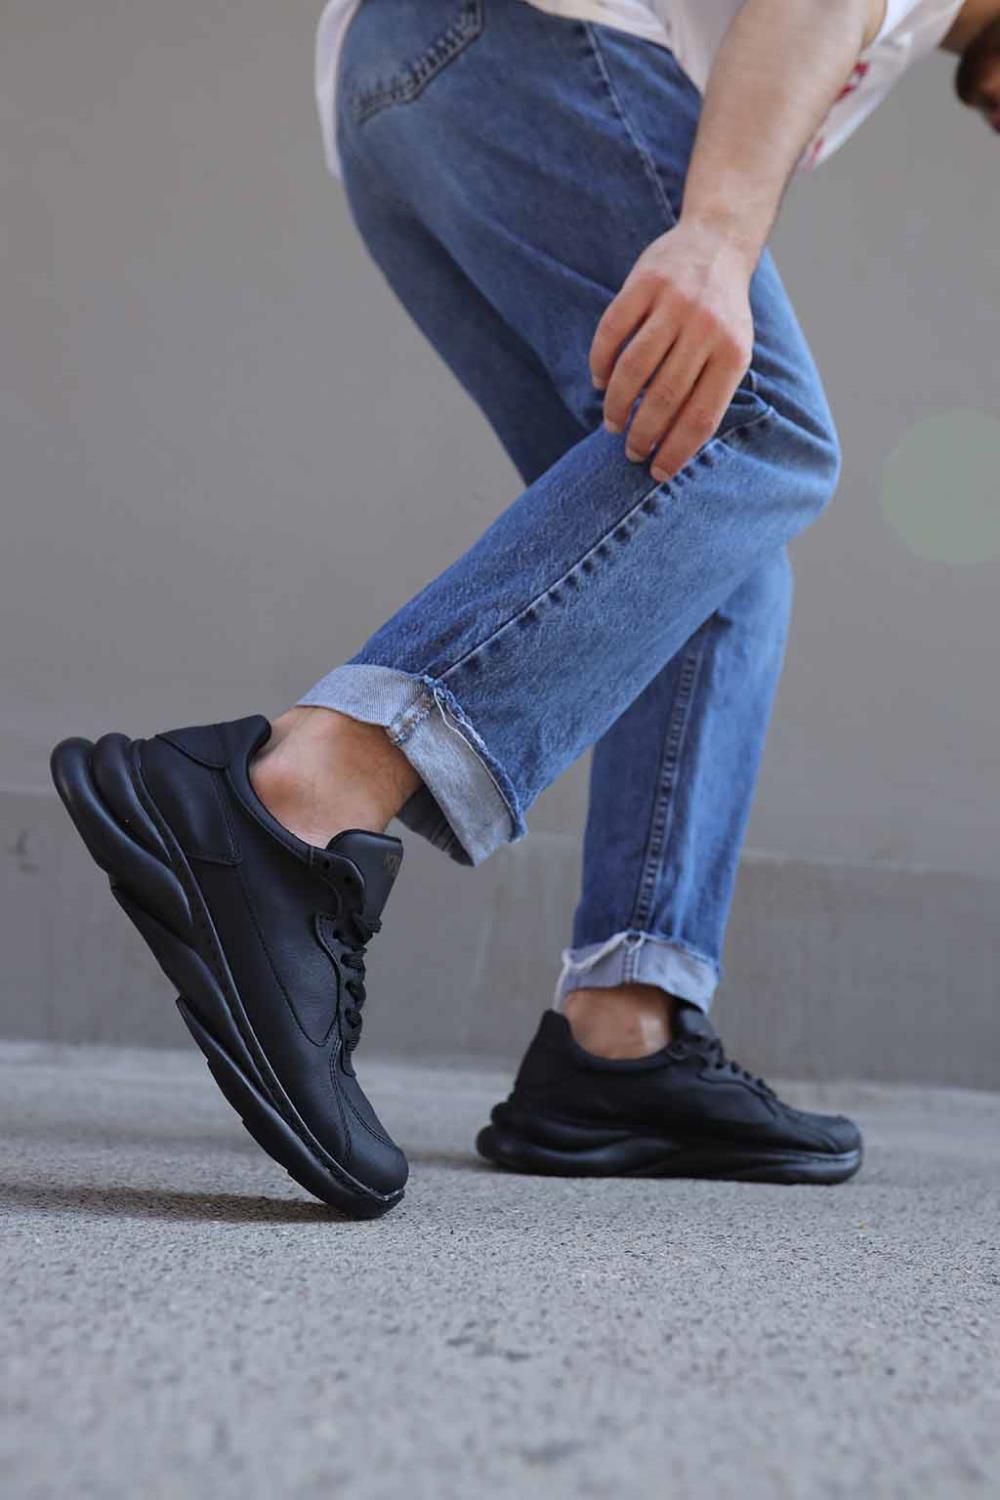 Men's Sneakers Shoes 065 Black (Black Sole) - STREETMODE ™